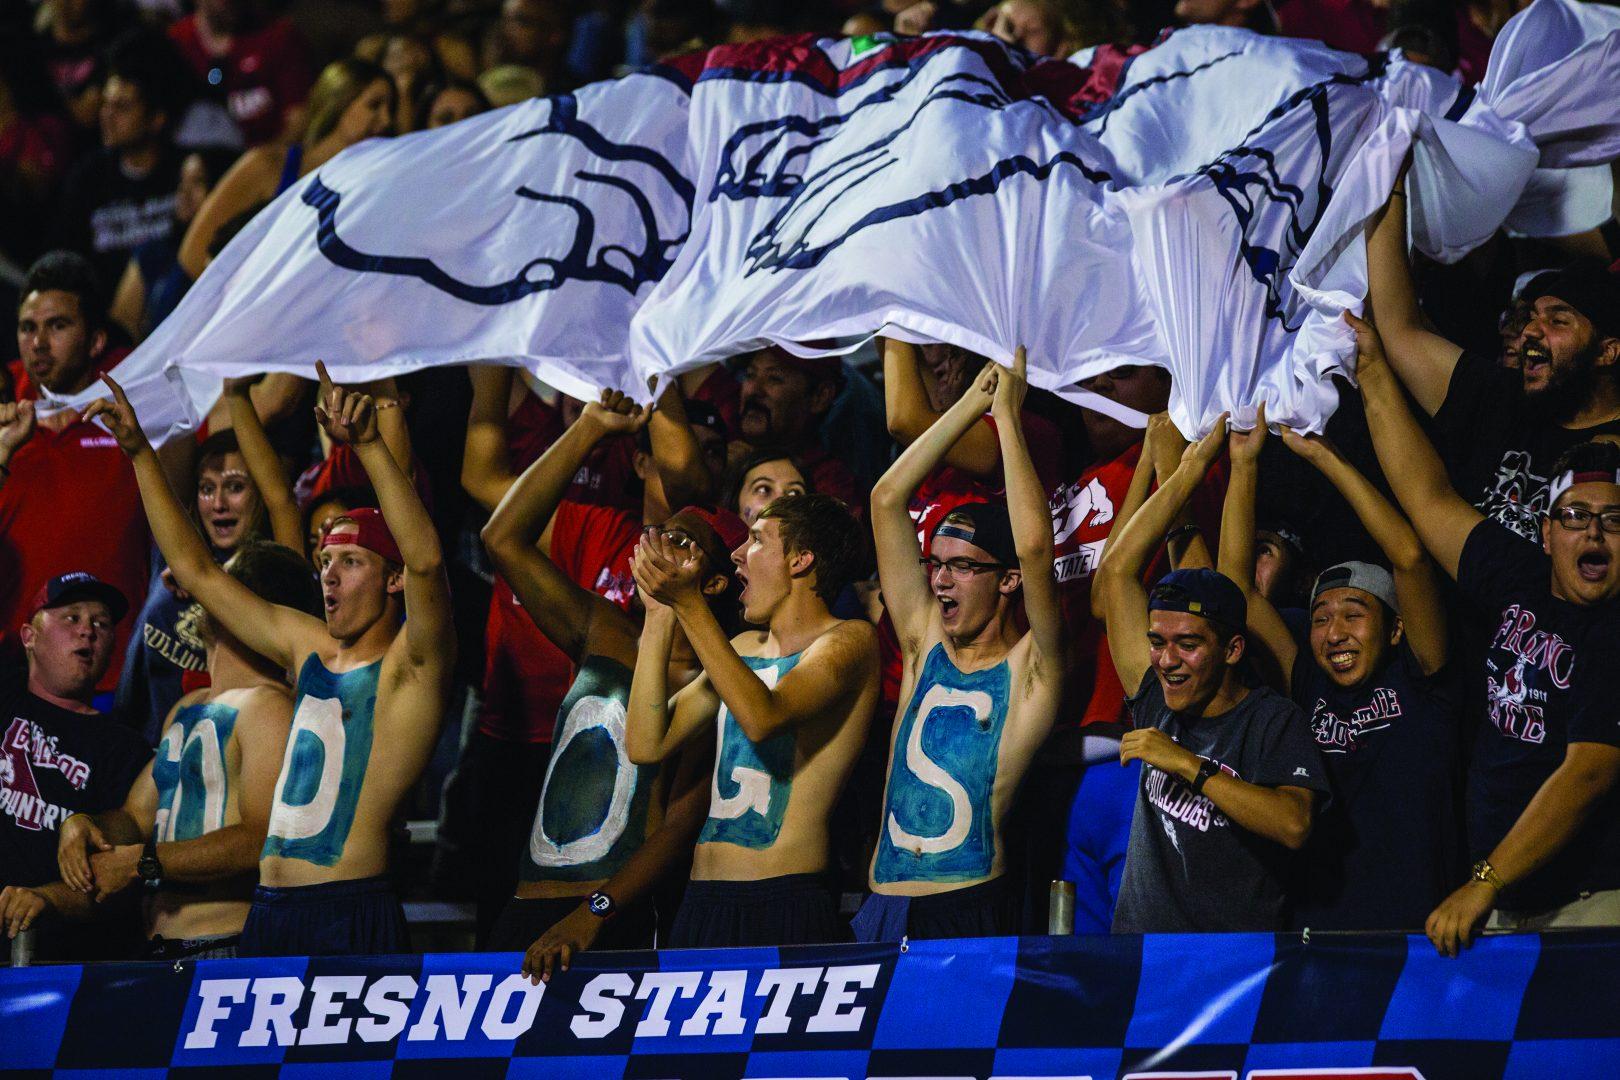 The Dog Pound cheering on the Fresno State football team at Bulldog Stadium. (Khone Saysamongdy/ The Collegian)